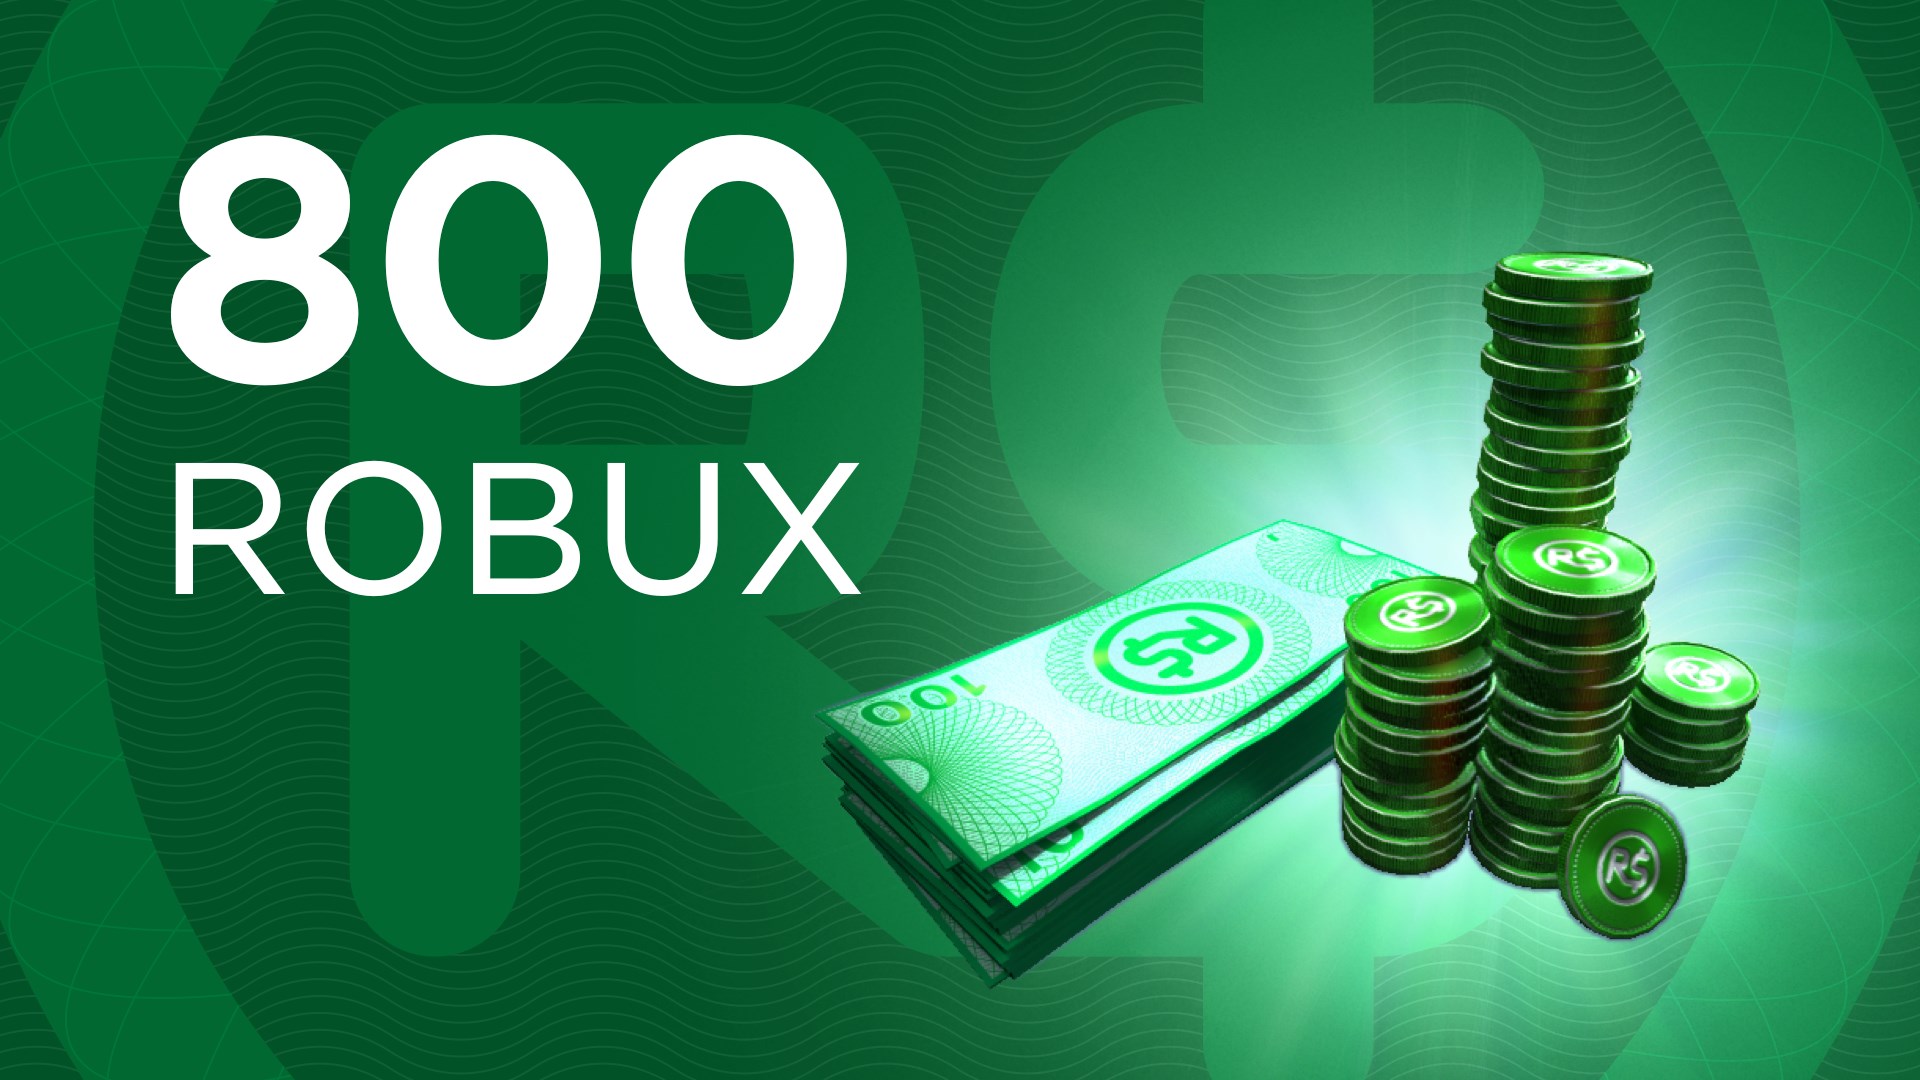 microsoft rewards roblox 100 robux